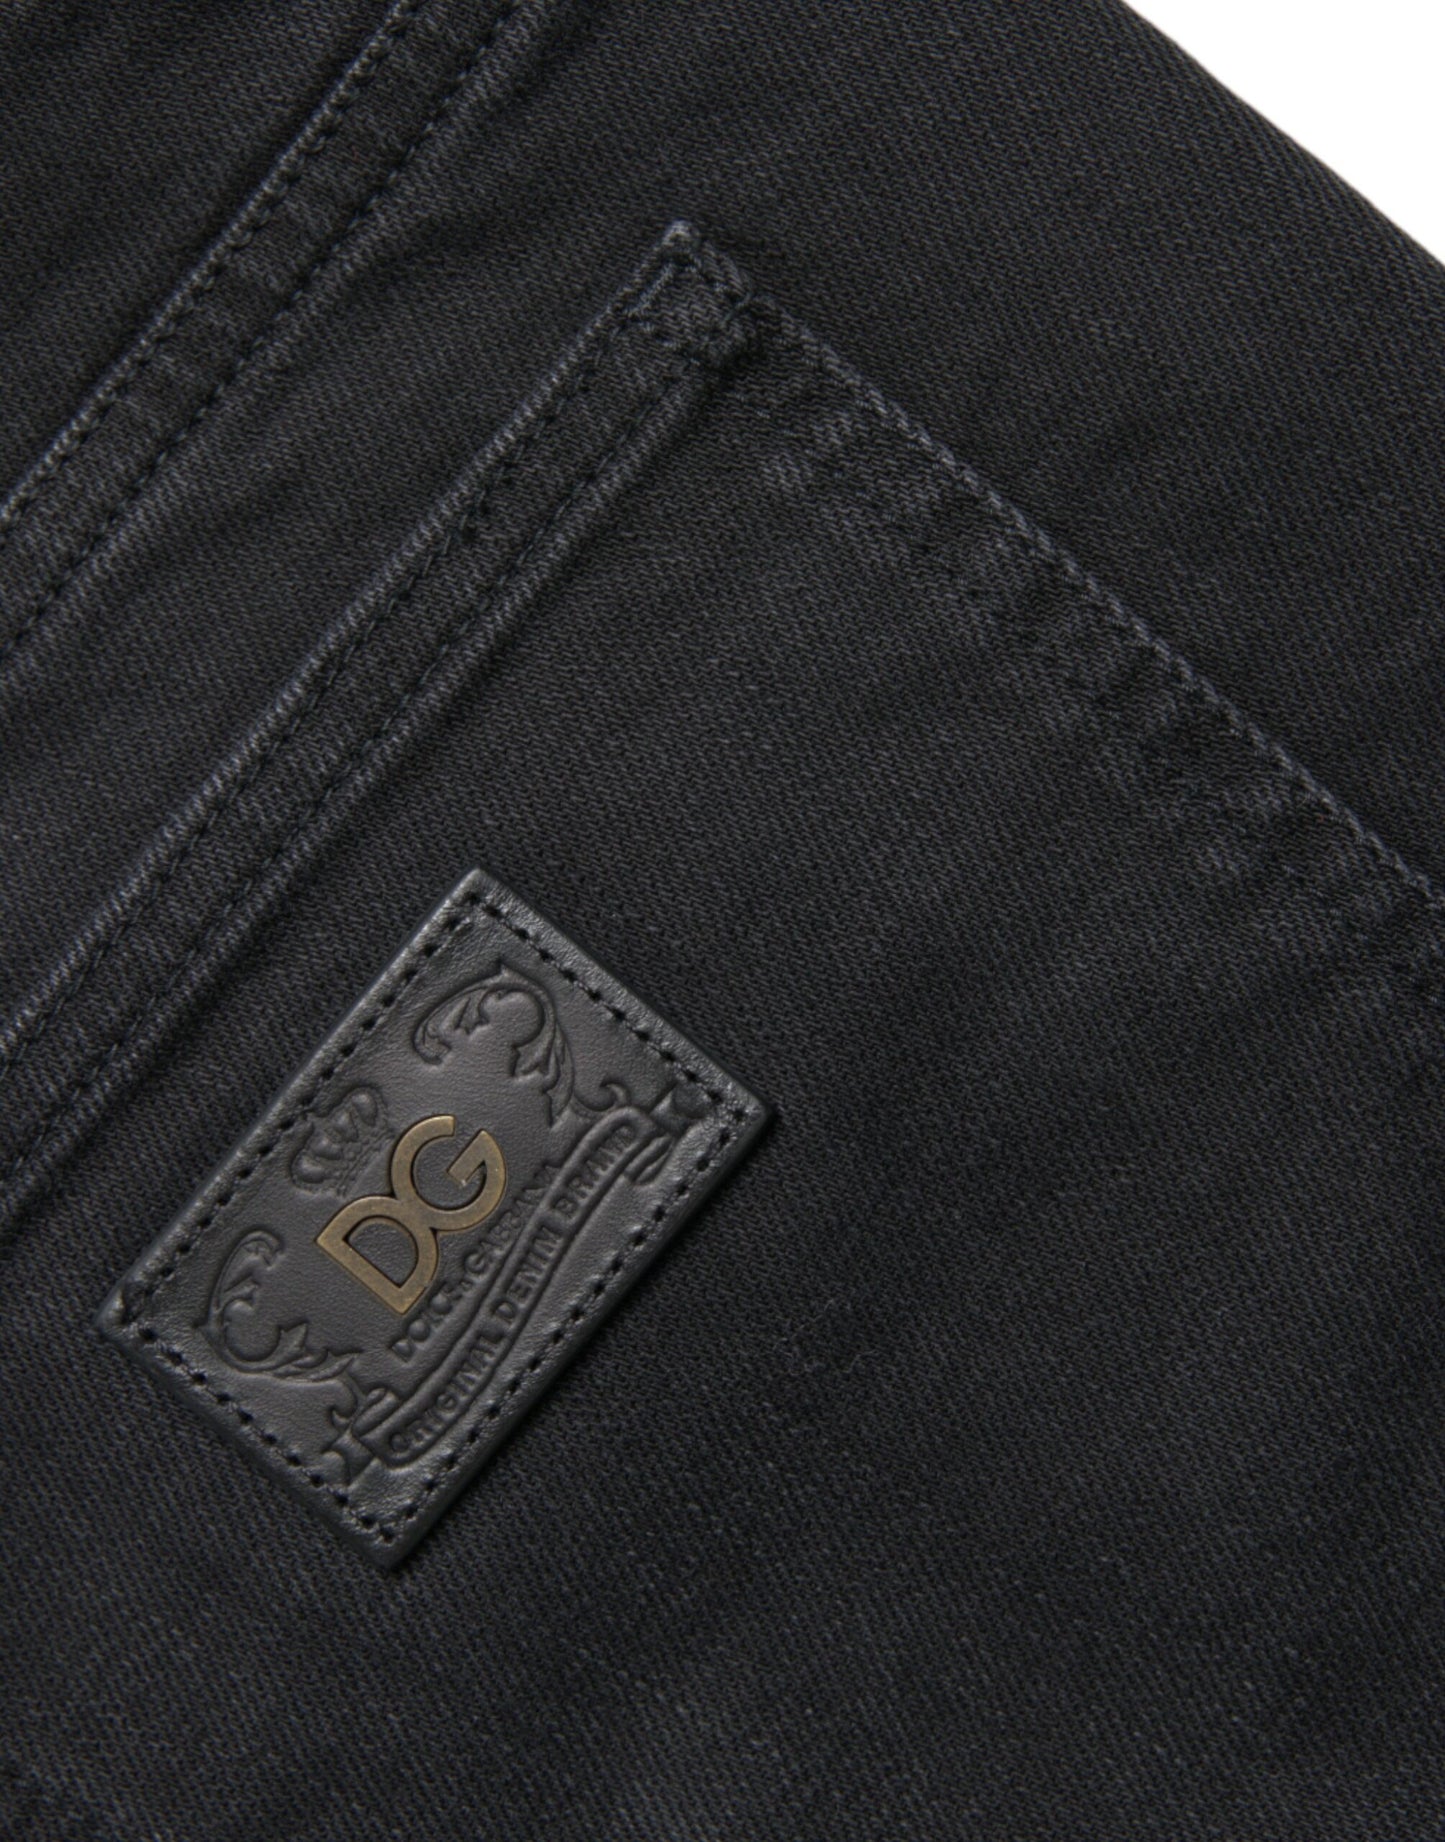 Dolce & Gabbana Chic Black Bermuda Denim Shorts